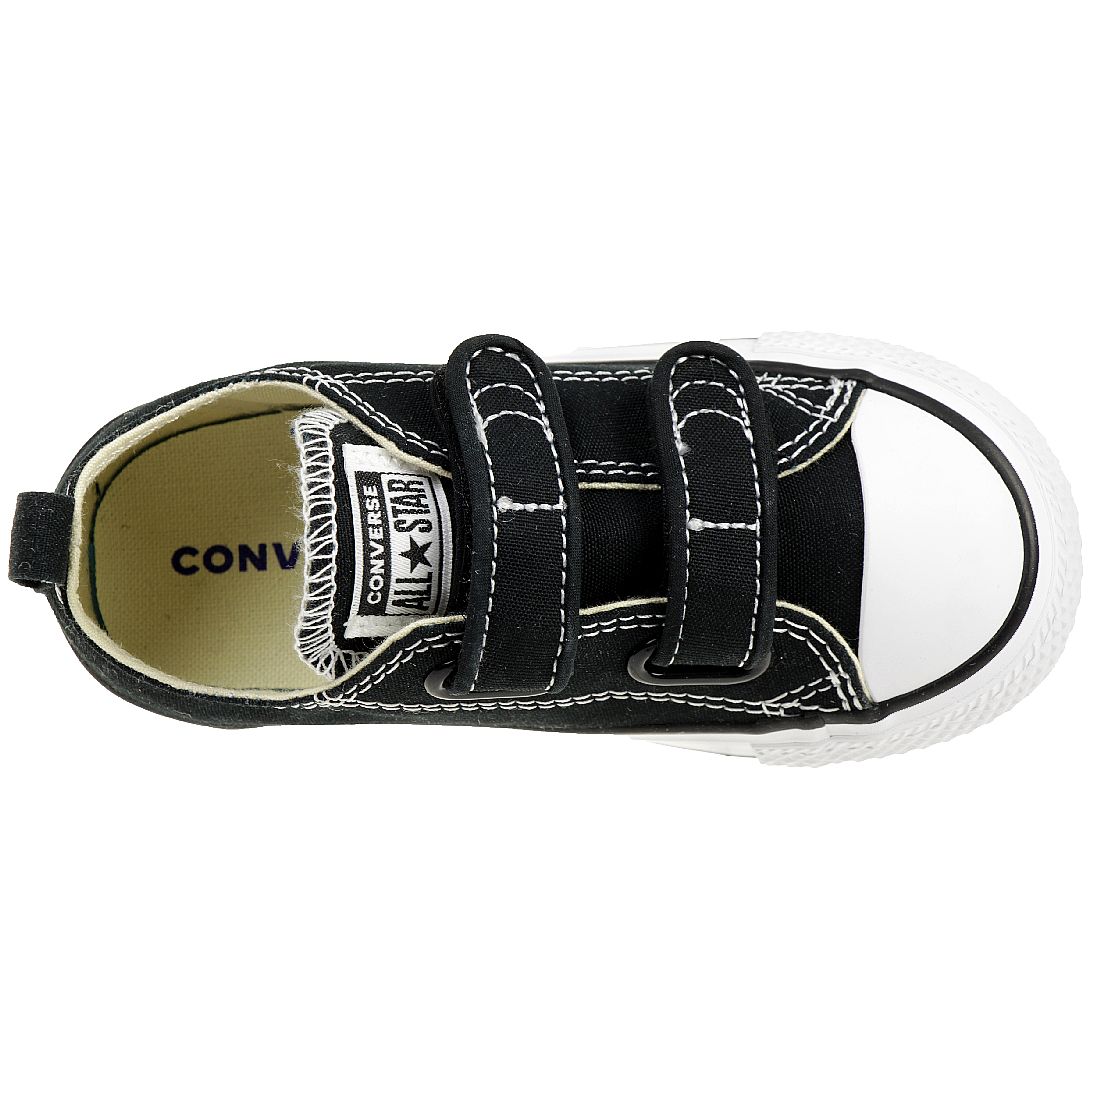 Converse CT 2V OX Chucks Kinder Sneaker Klett canvas schwarz 7V603C